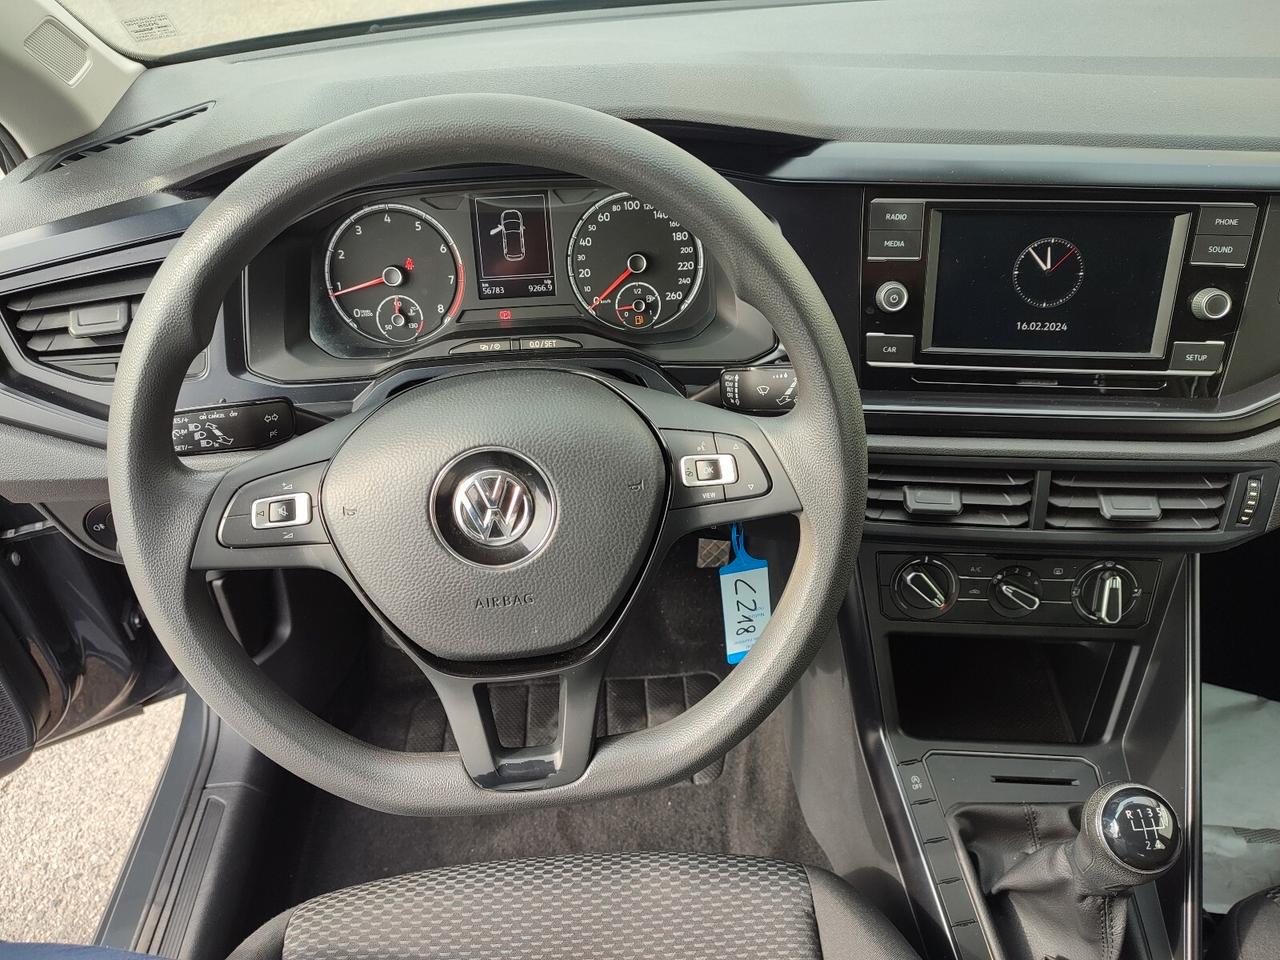 Volkswagen Polo 1.0 MPI 5p. Trendline BlueMotion Technology